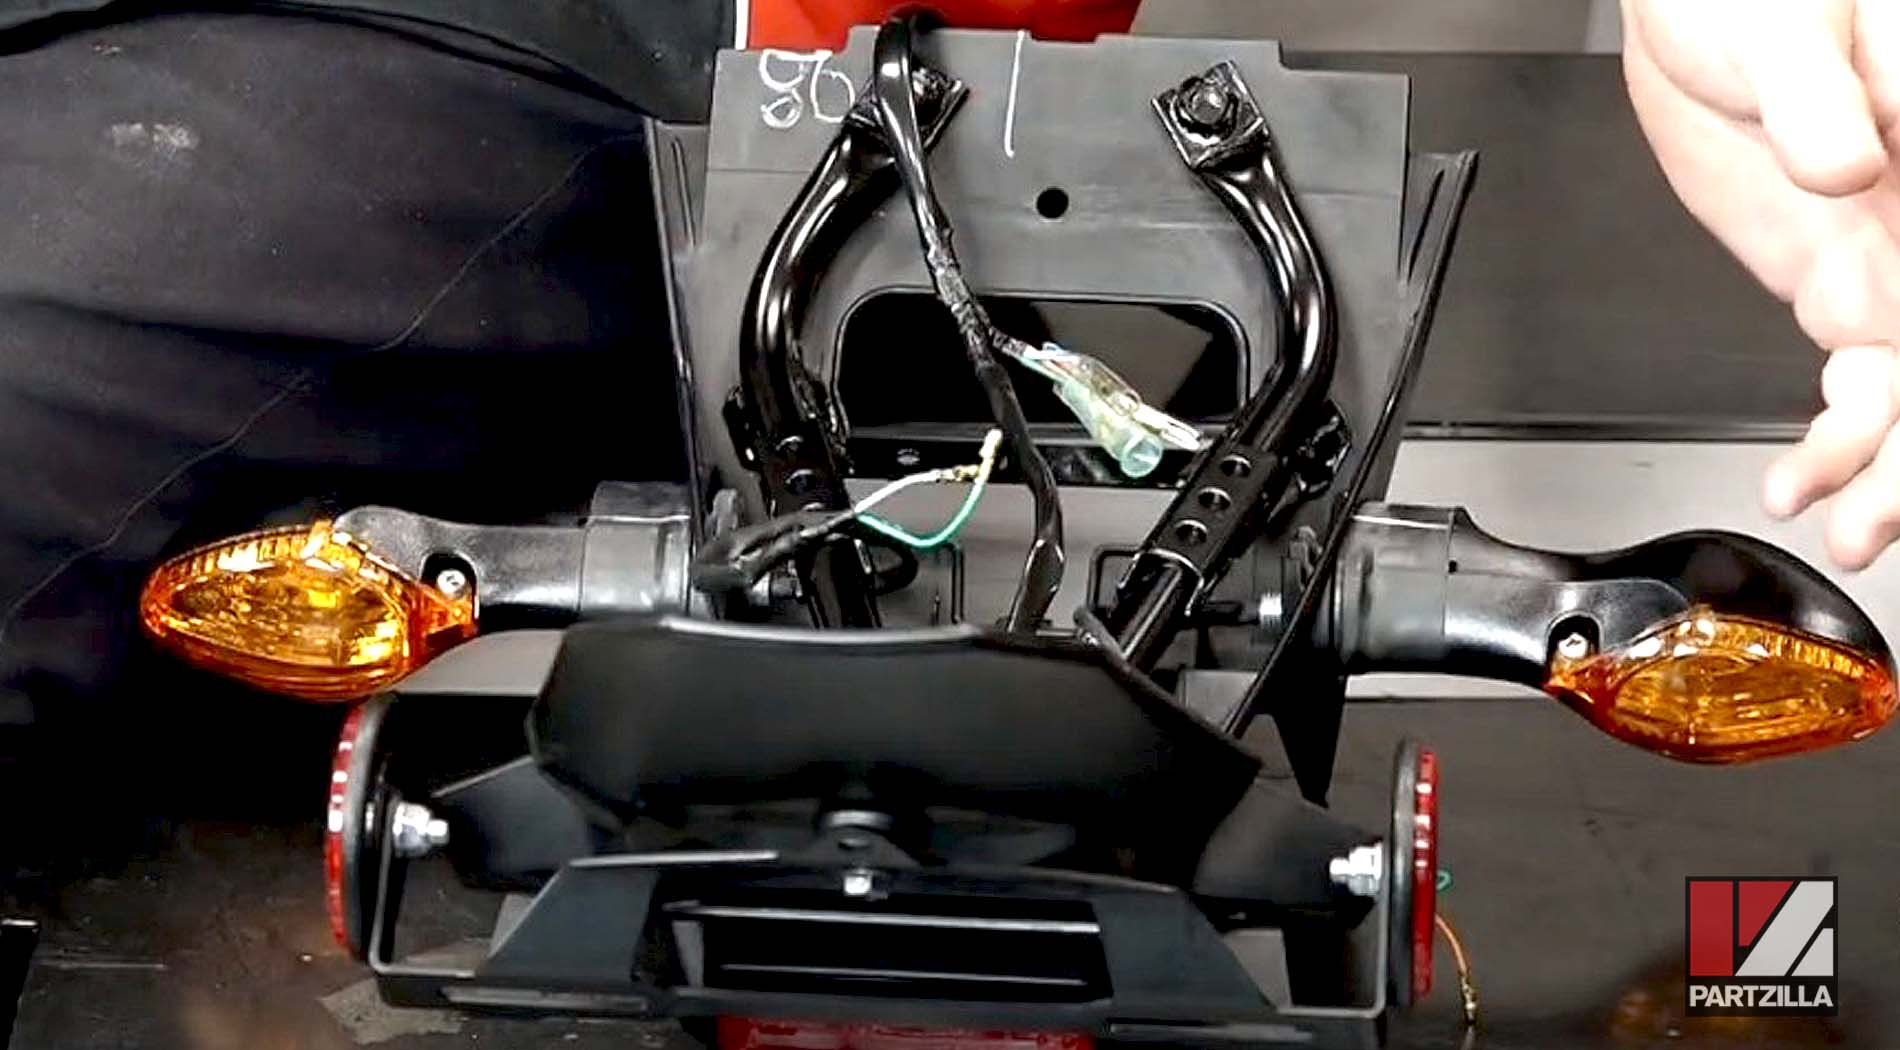 2018 Honda Grom 125 aftermarket rear fender eliminator upgrade